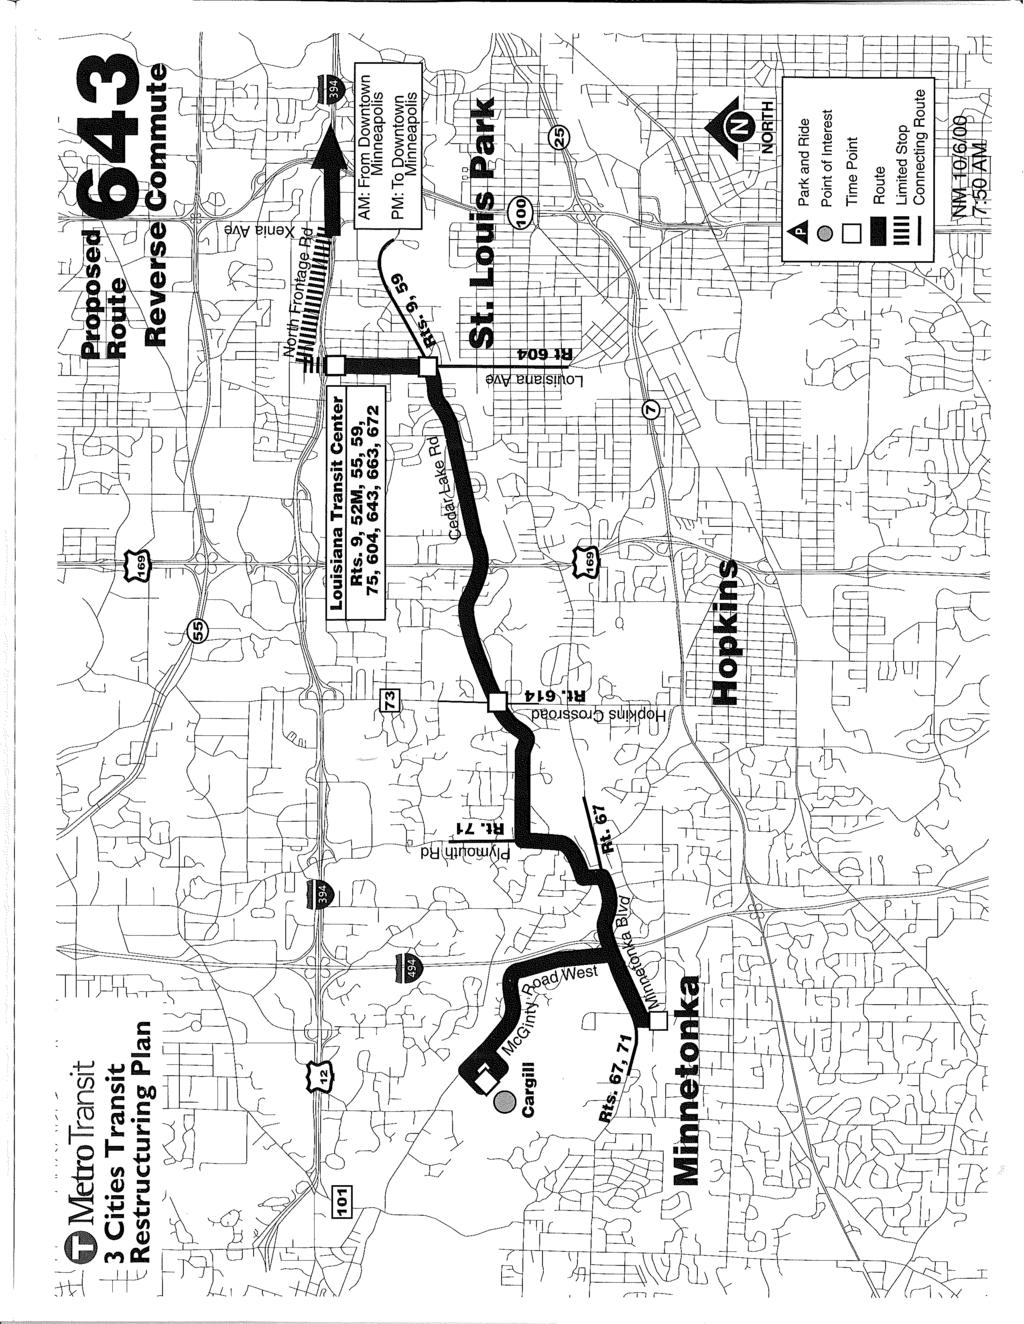 ~ jj' MetroTransit --i- 3 Cities Transit t Restructuring Plan ~ '3 J Park